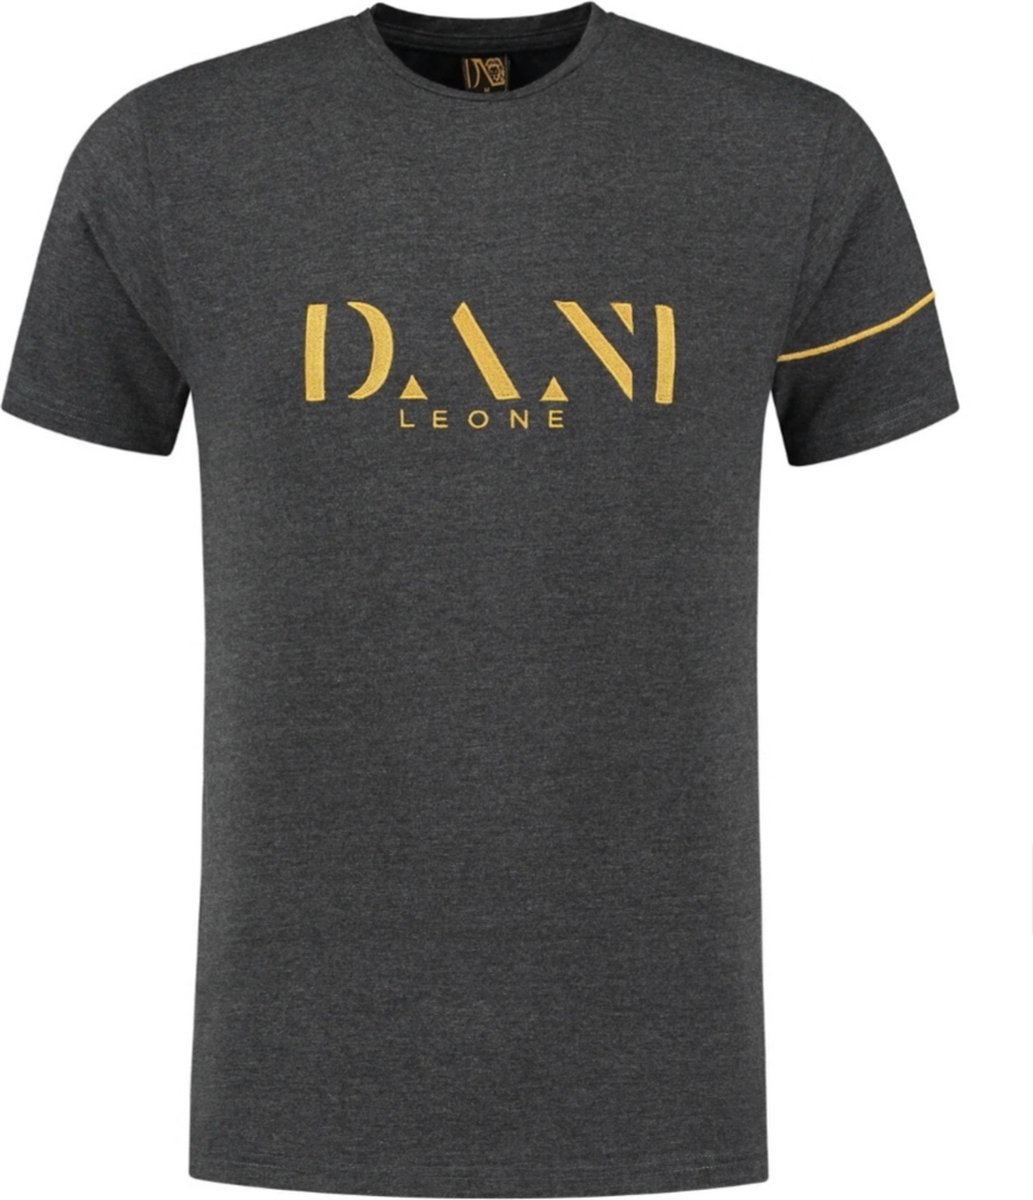 Dani leone t-shirt gold edition (XL) grey